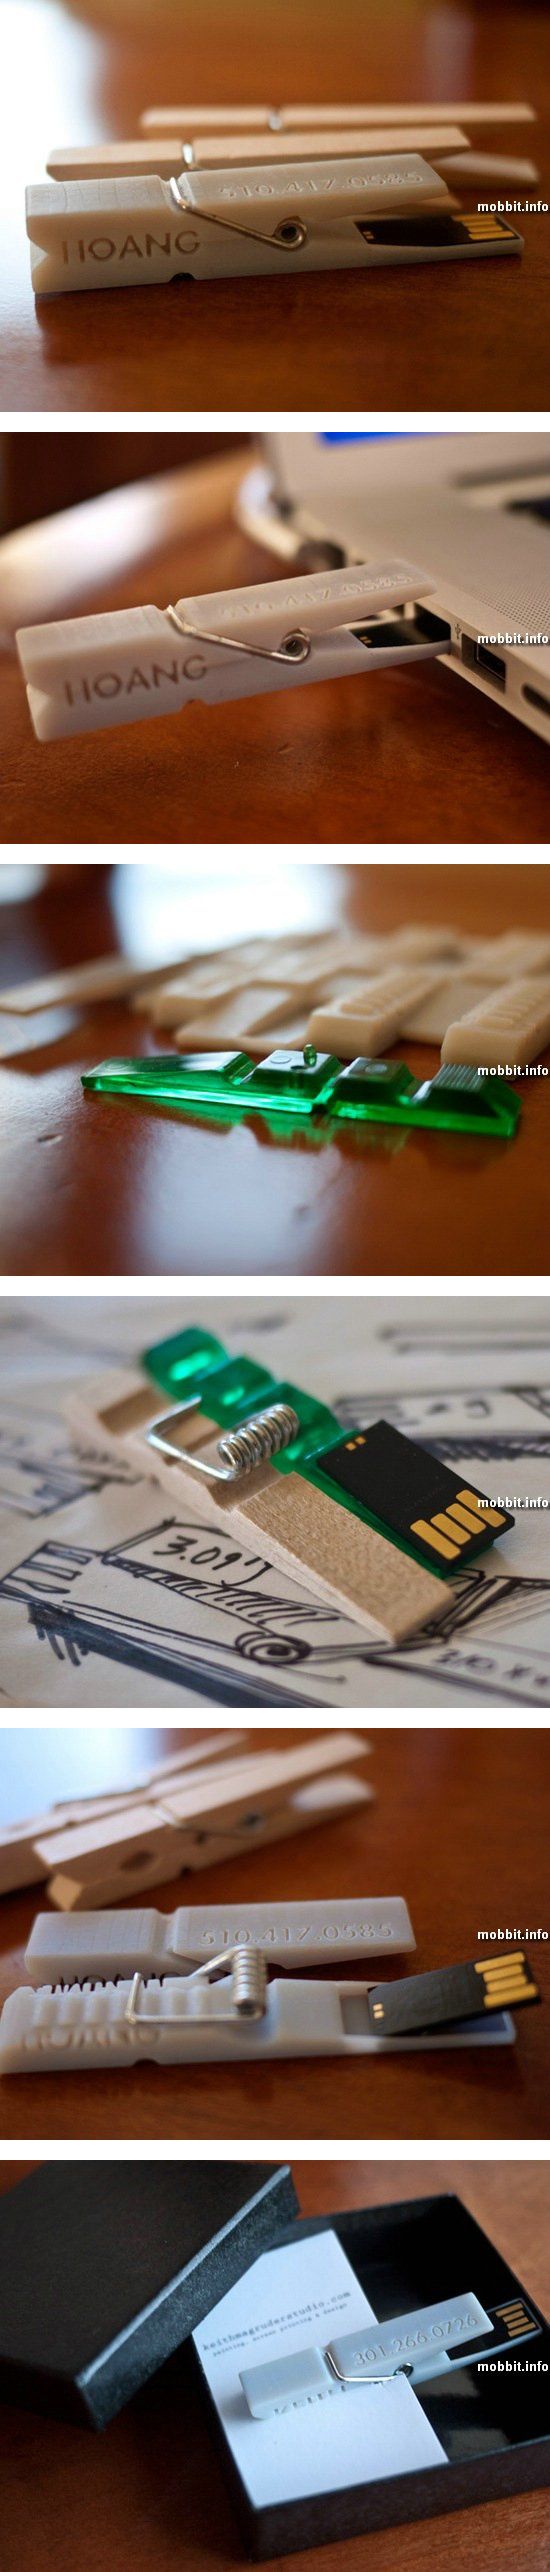   USB-  